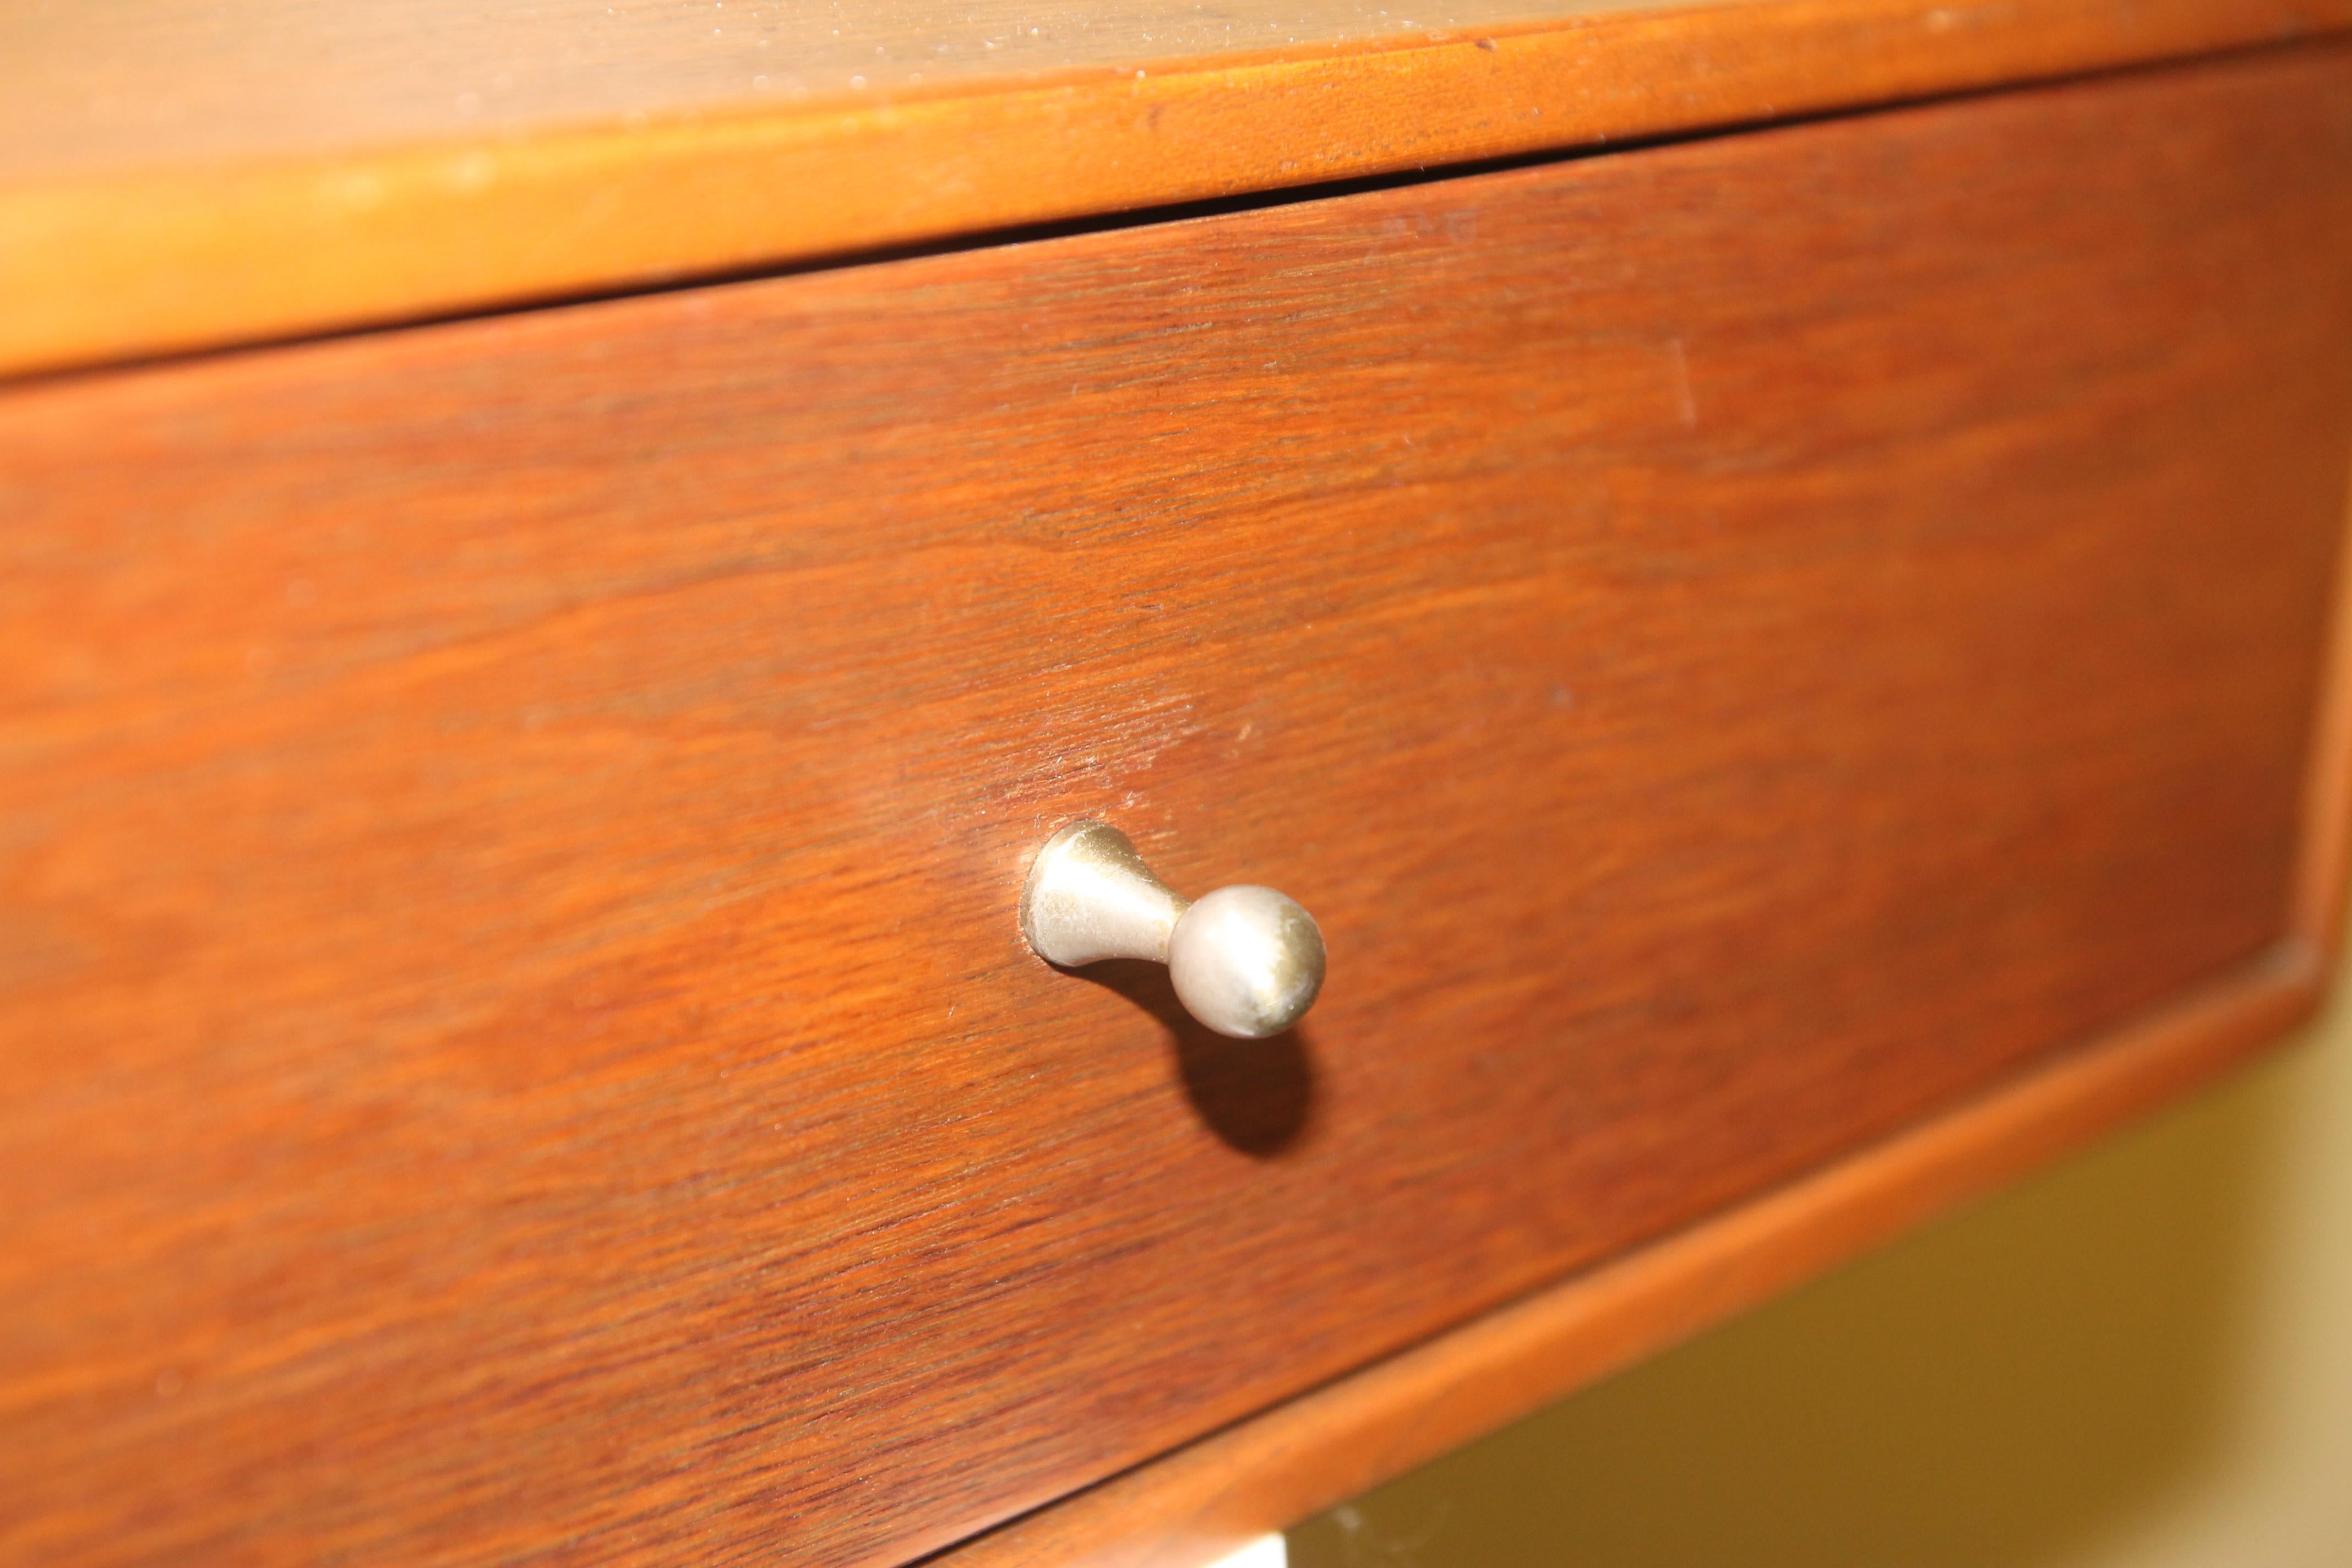 Dresser Top Jewel Box in the Manner of Paul McCobb 1